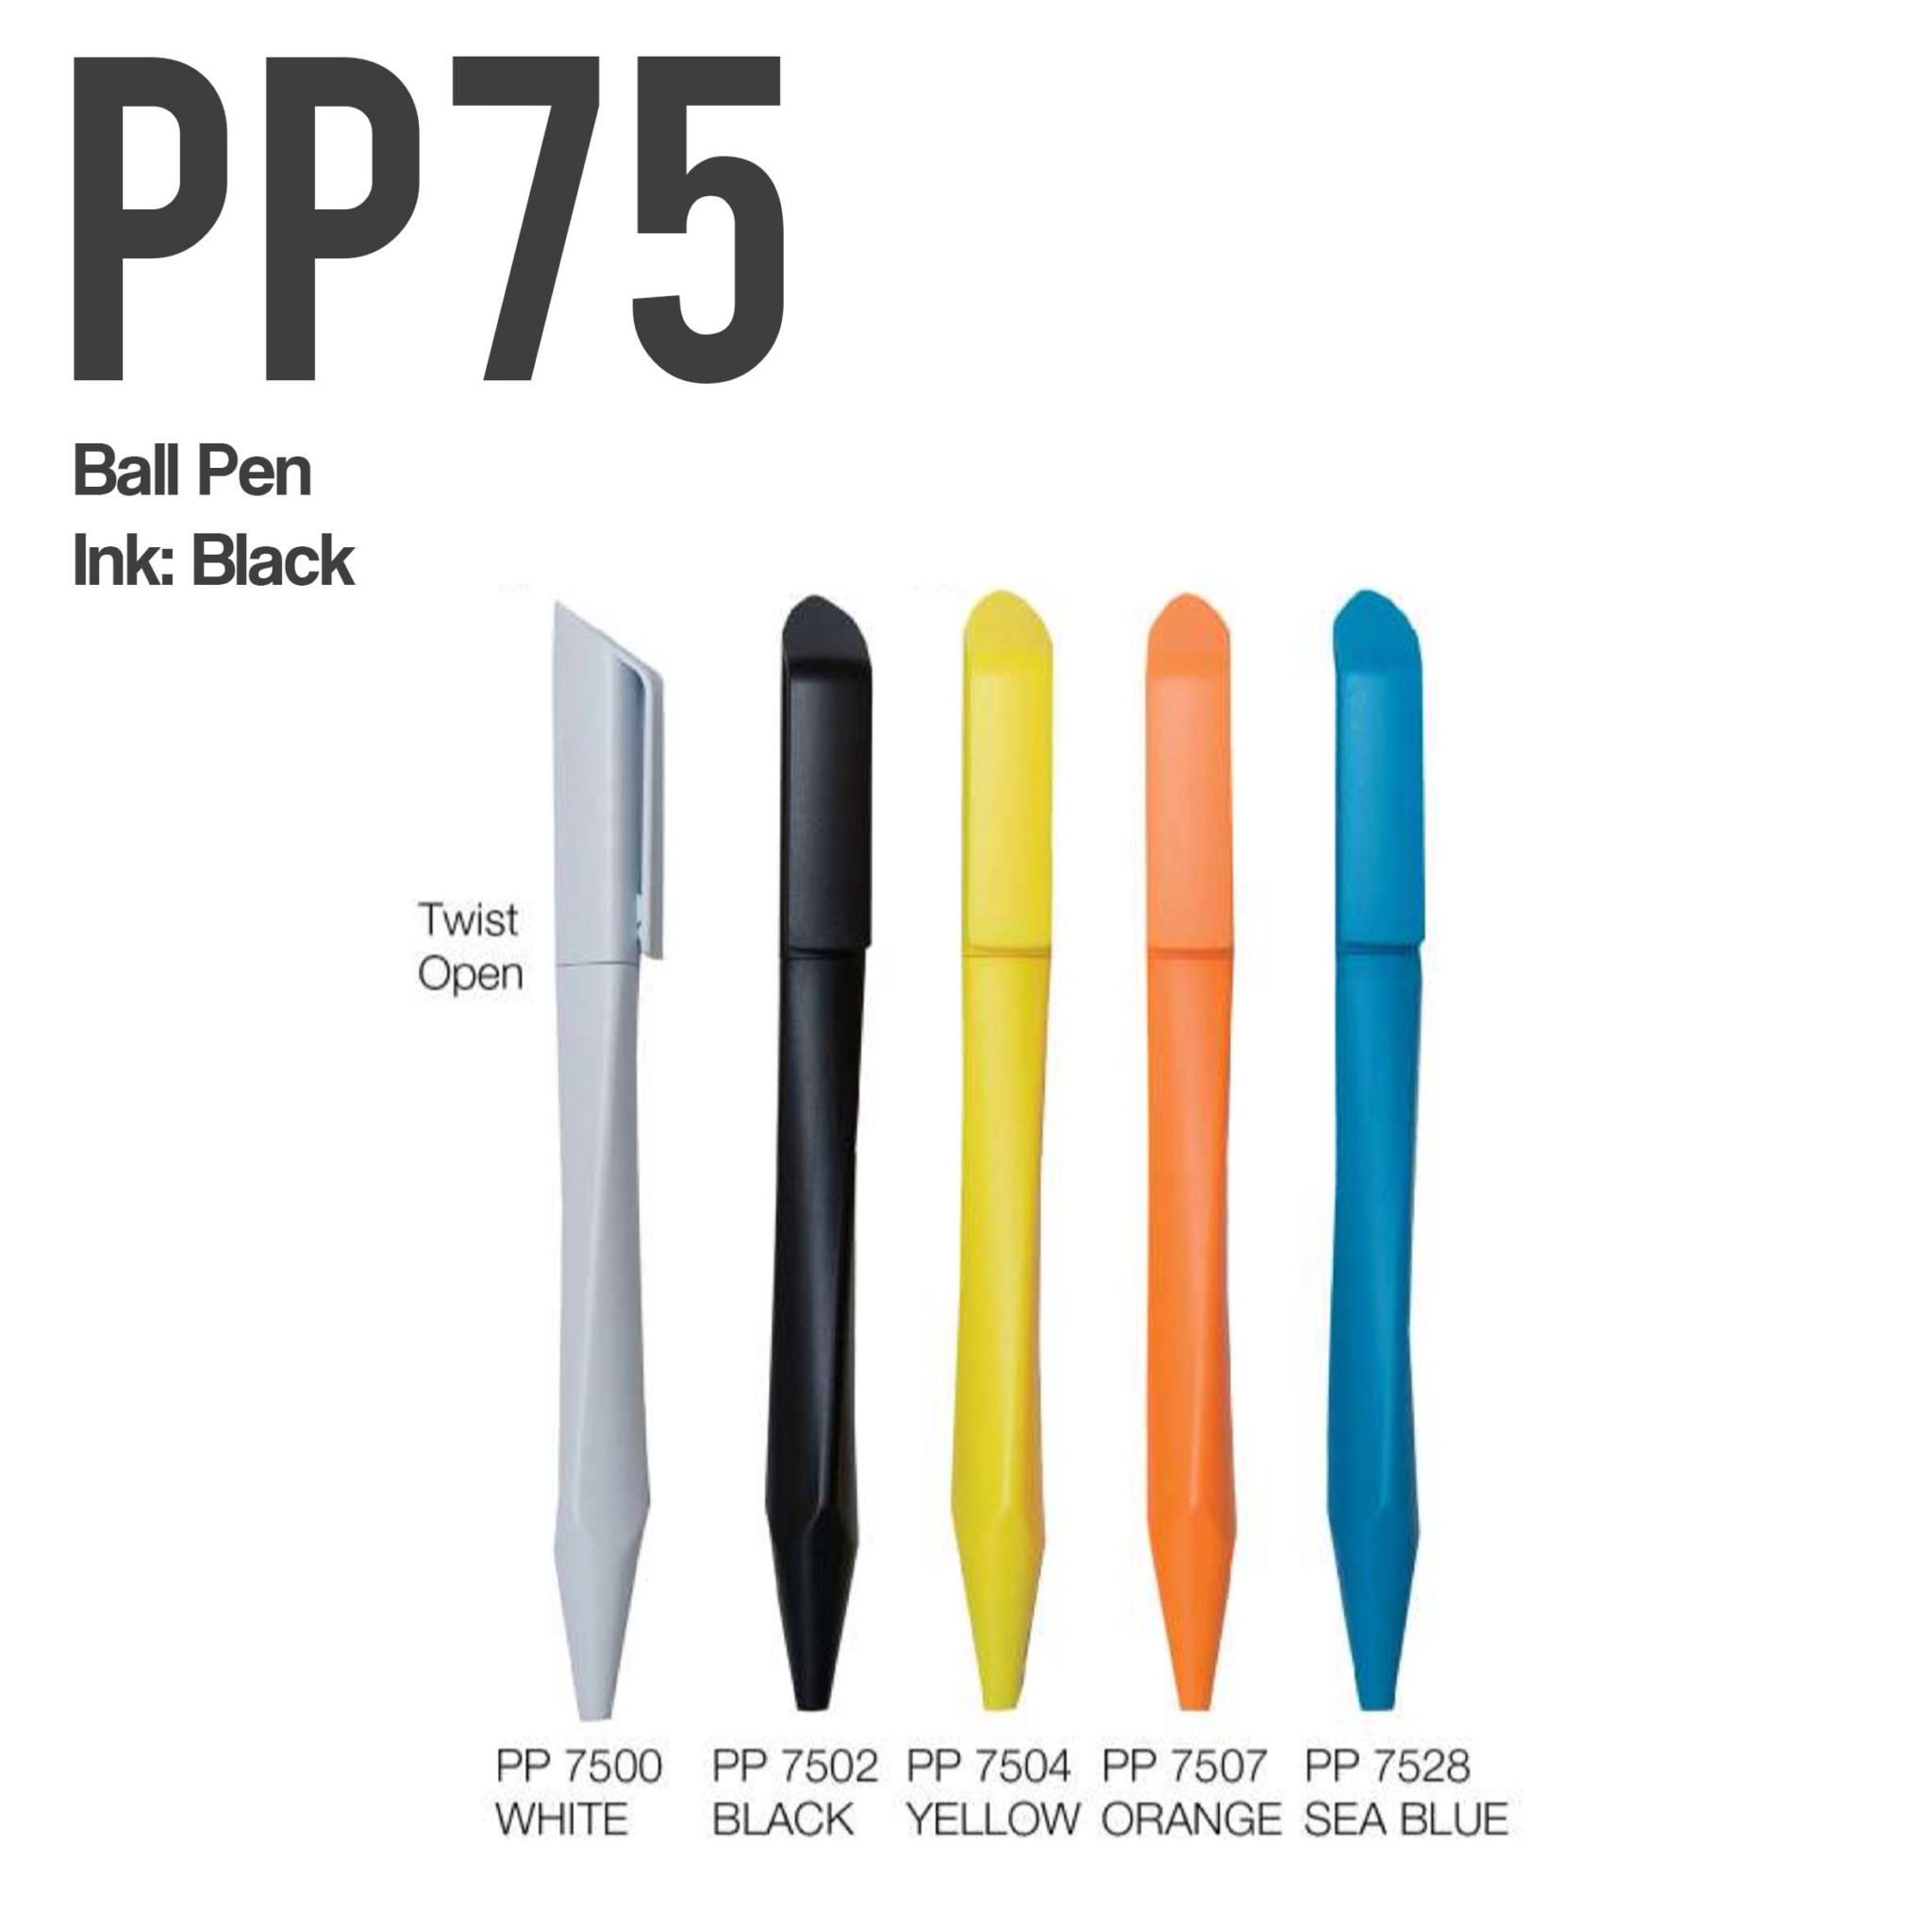 PP75 plastic pen scaled